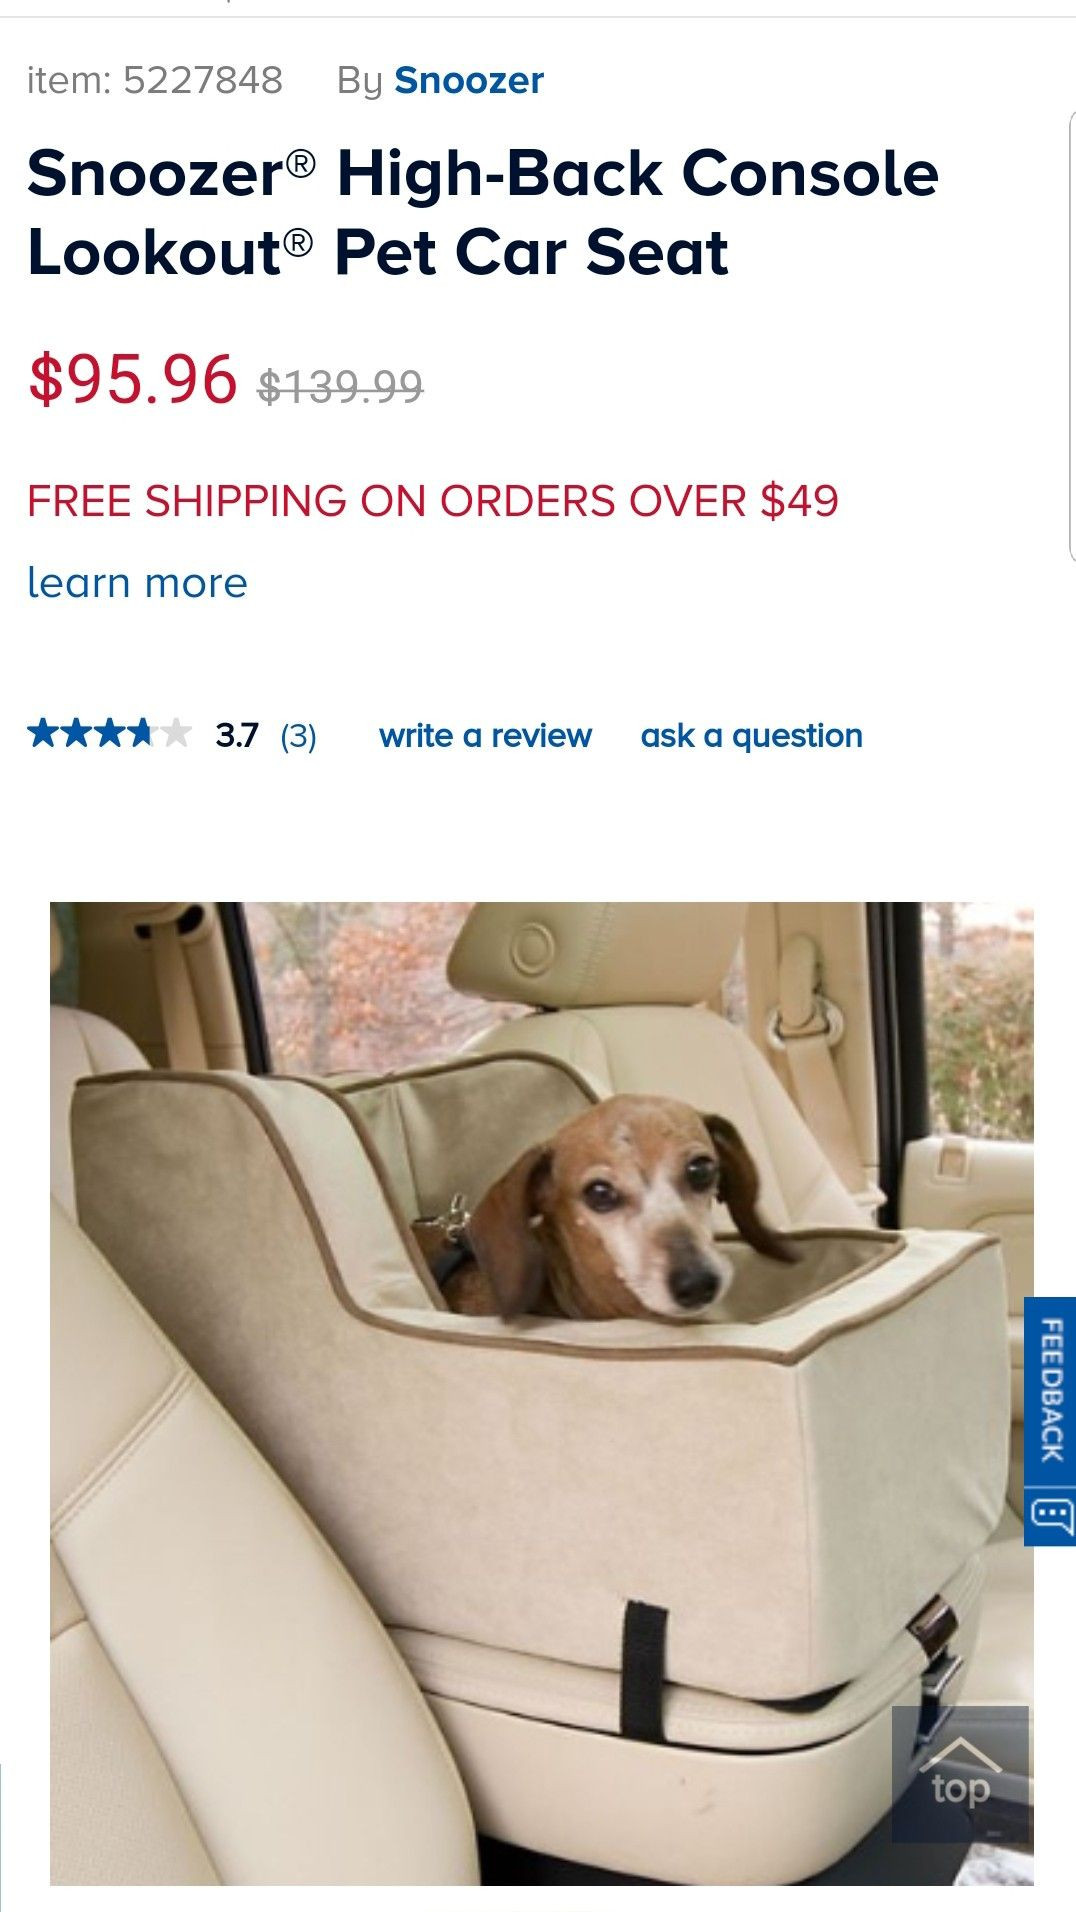 DIY Dog Console Car Seat
 Snoozer High Back Console Lookout Pet Car Seat at Pet